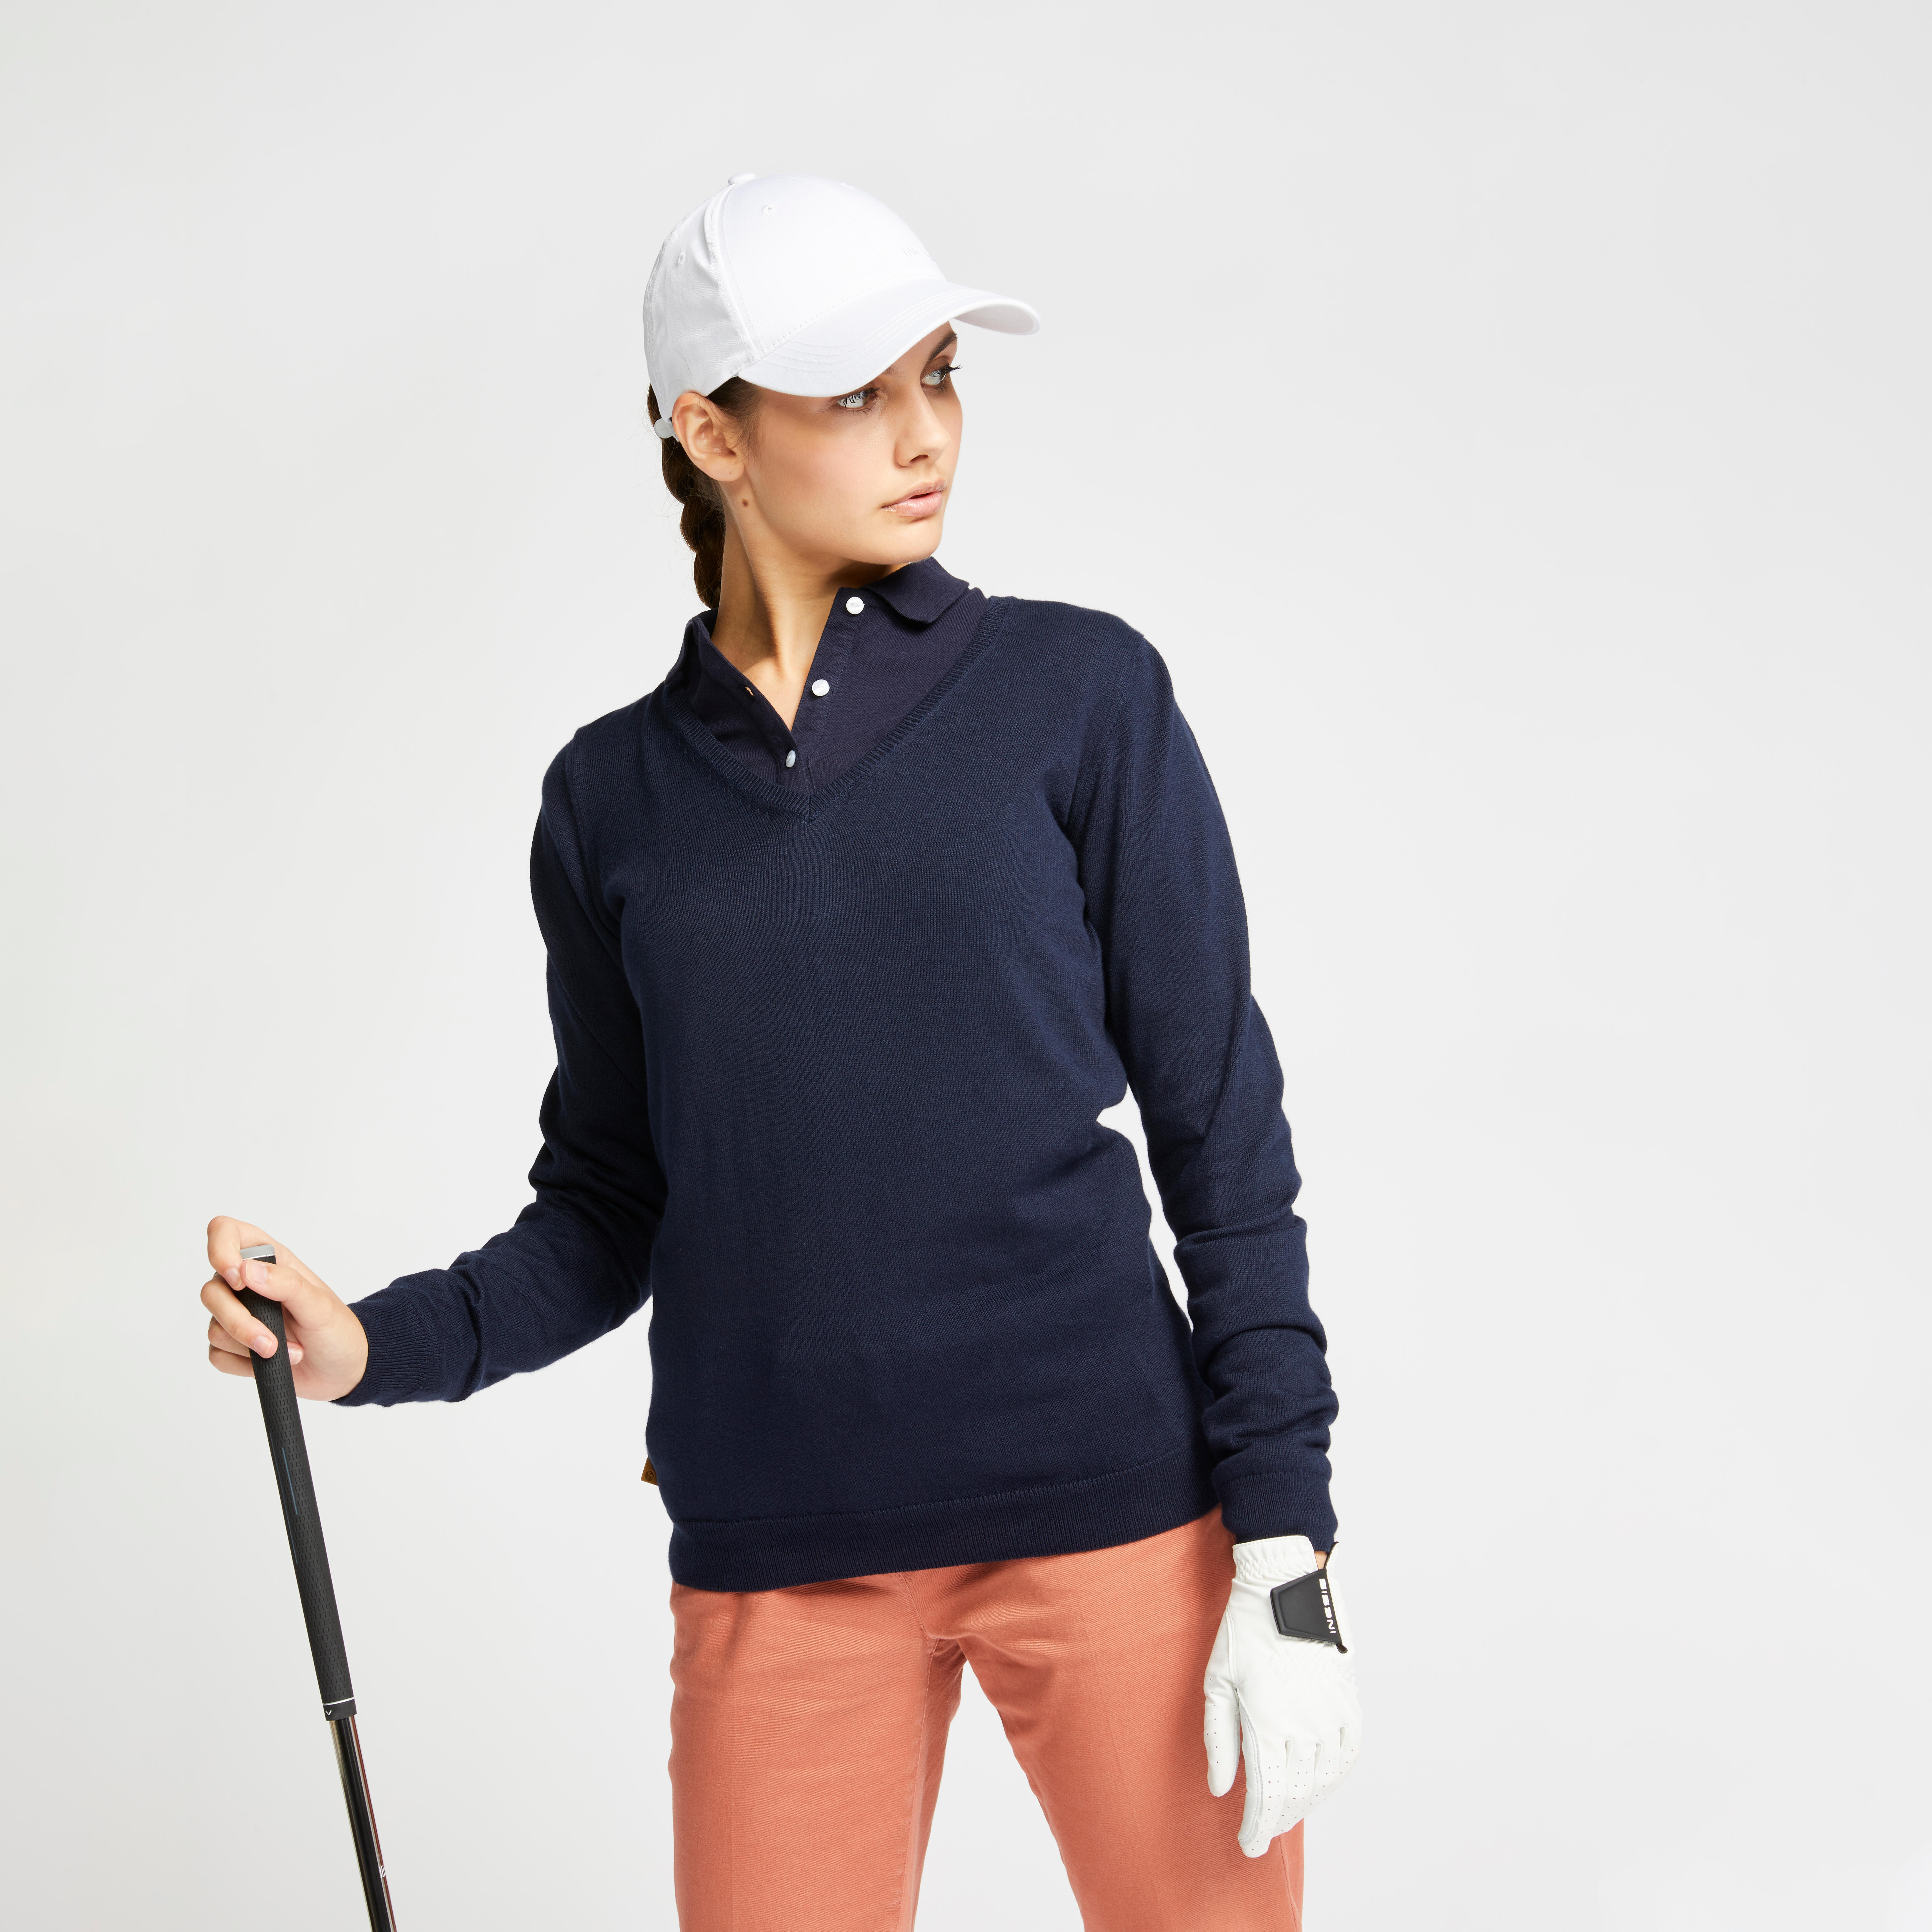 Image of Women's Golf Sweater - MW 500 Blue